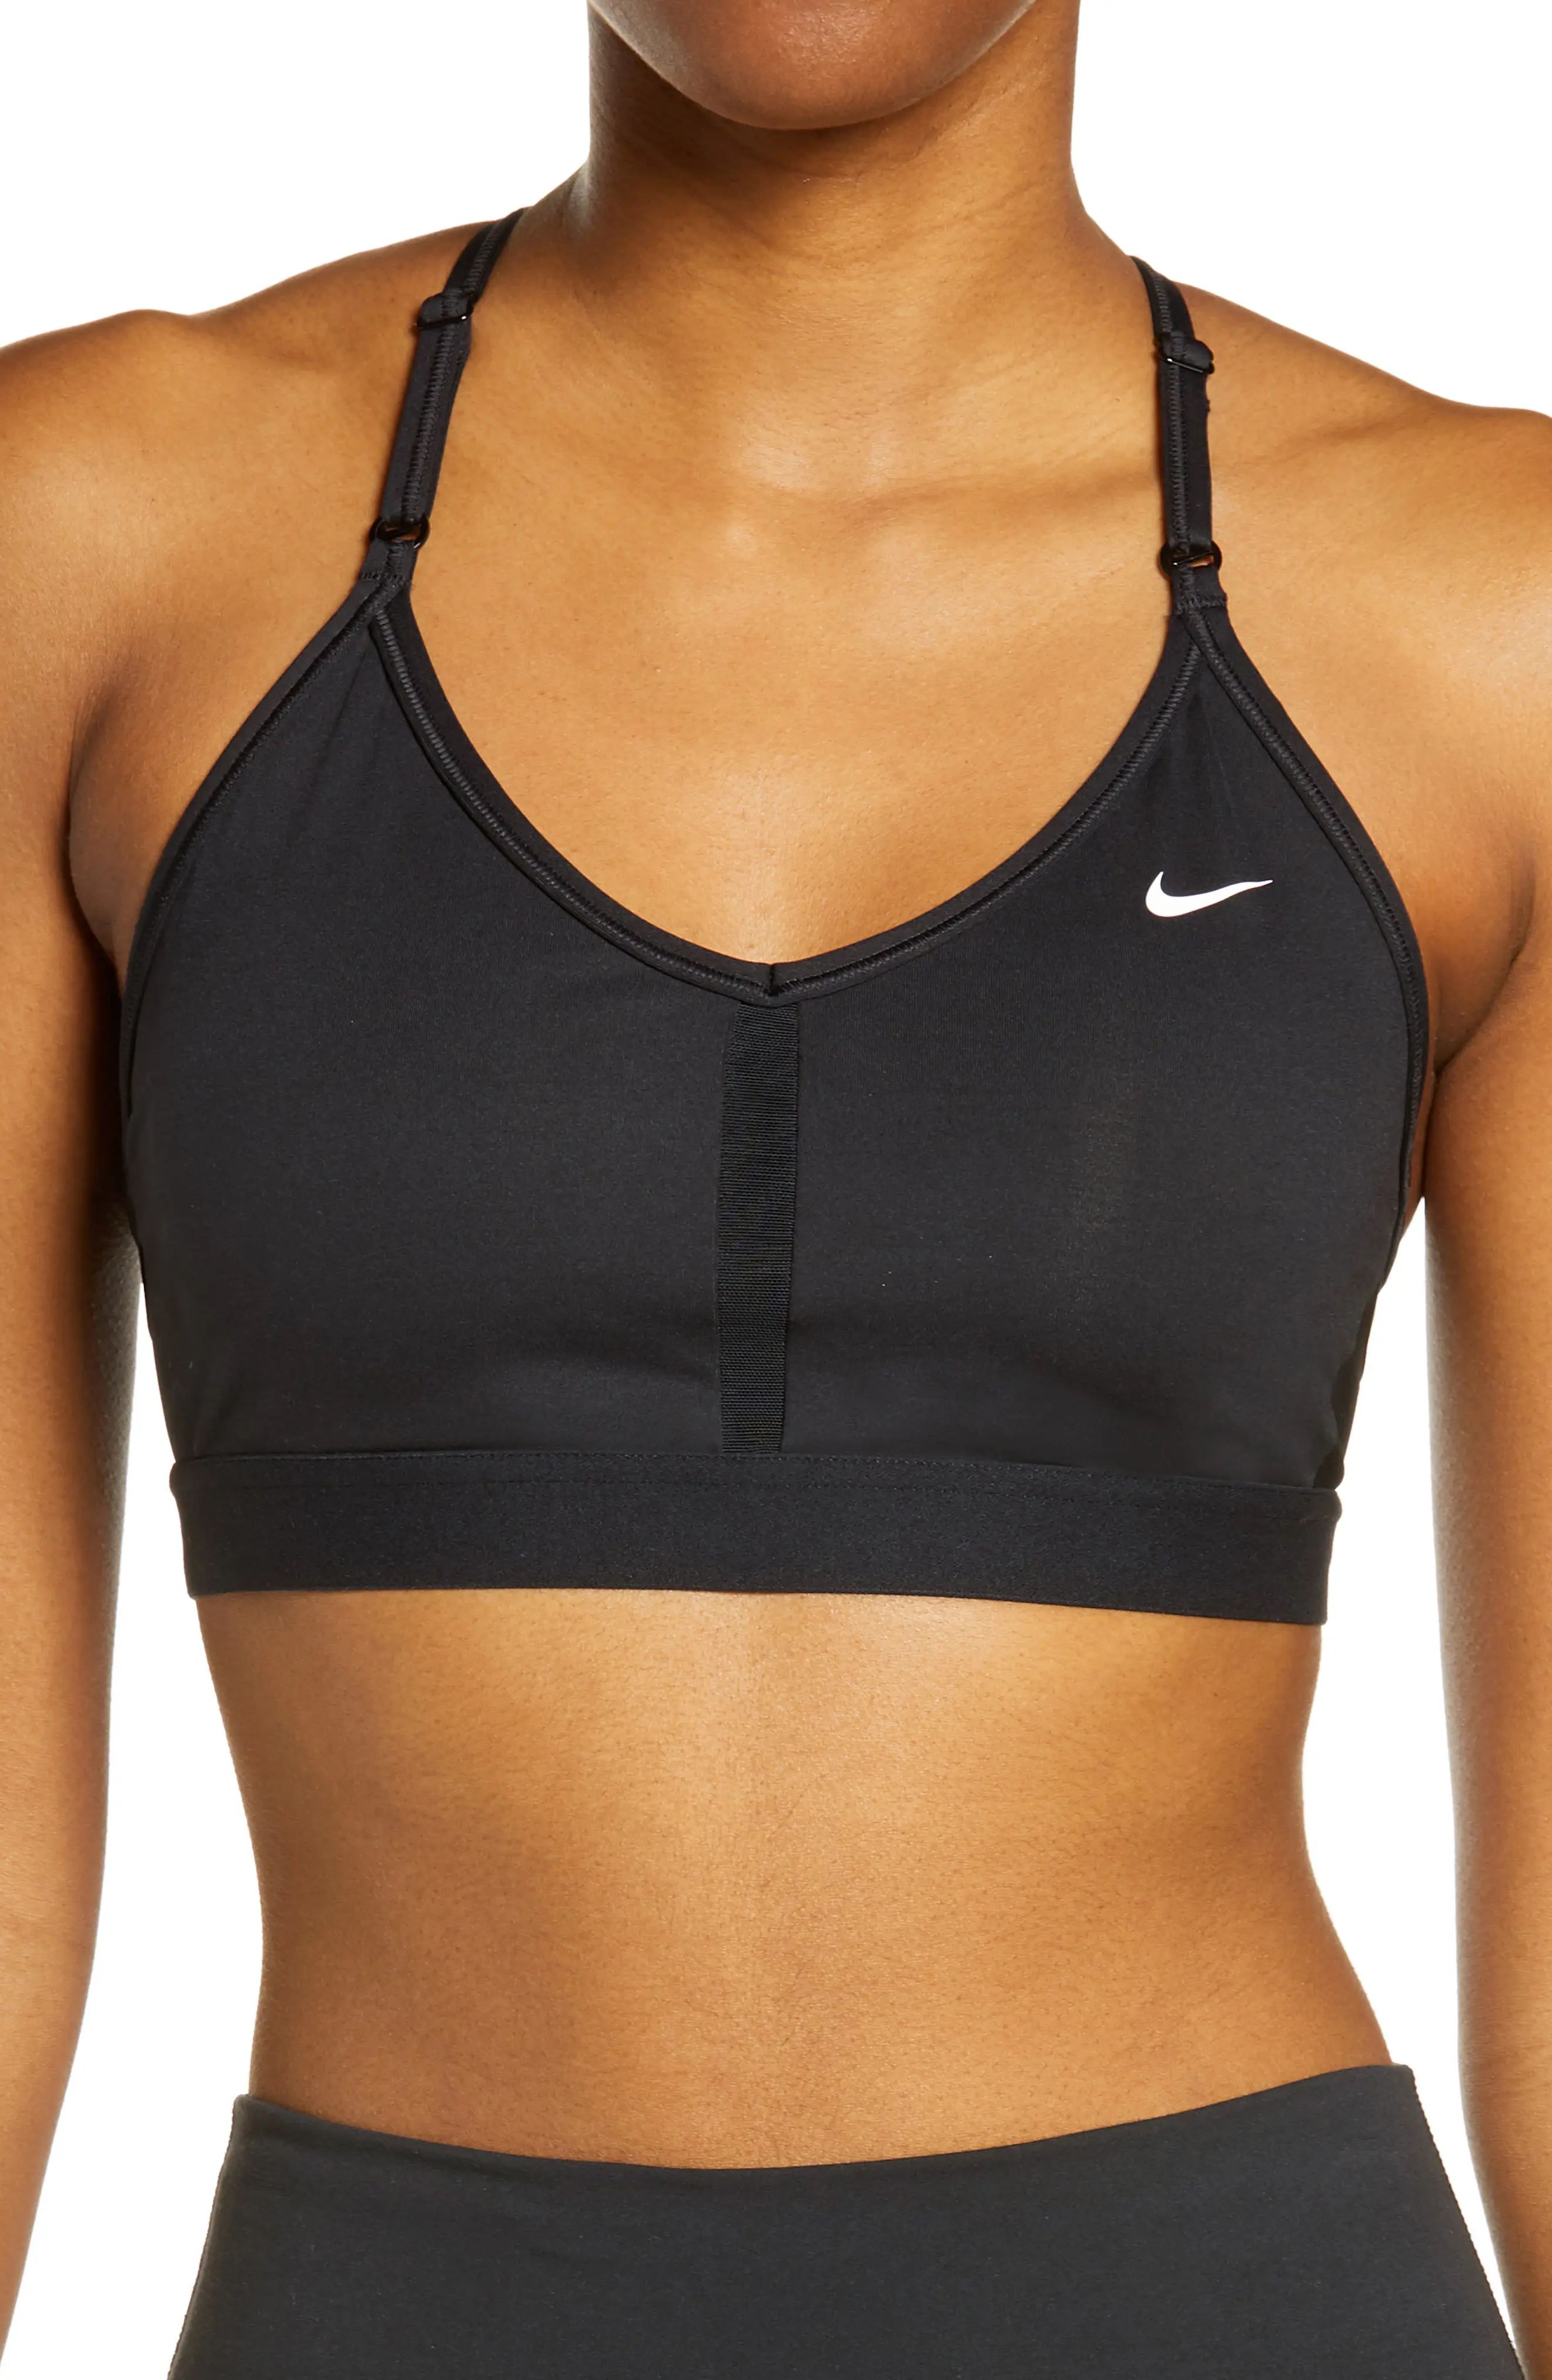 Nike Indy Mesh Inset Sports Bra in Black/Black/White at Nordstrom, Size Large | Nordstrom